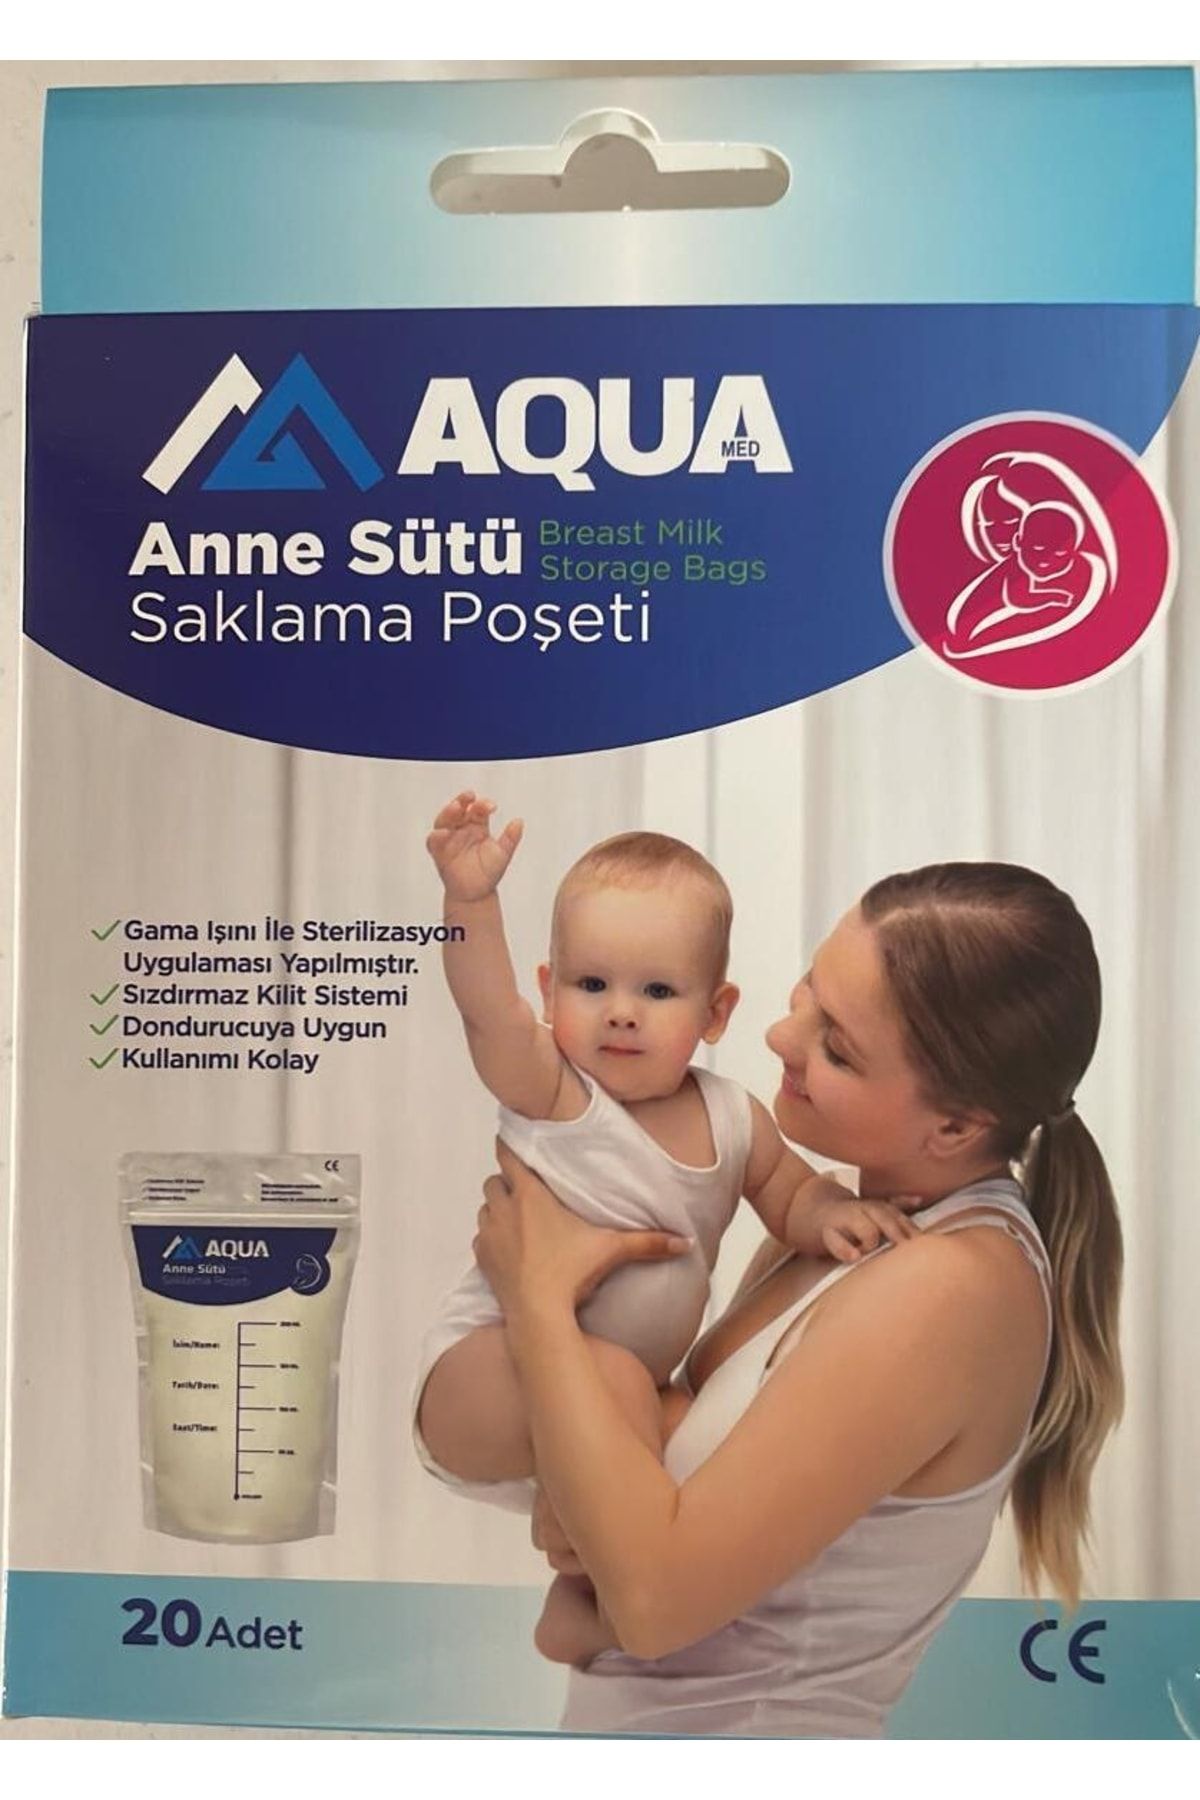 Aqua Anne Sütü Saklama Poşeti 20lik